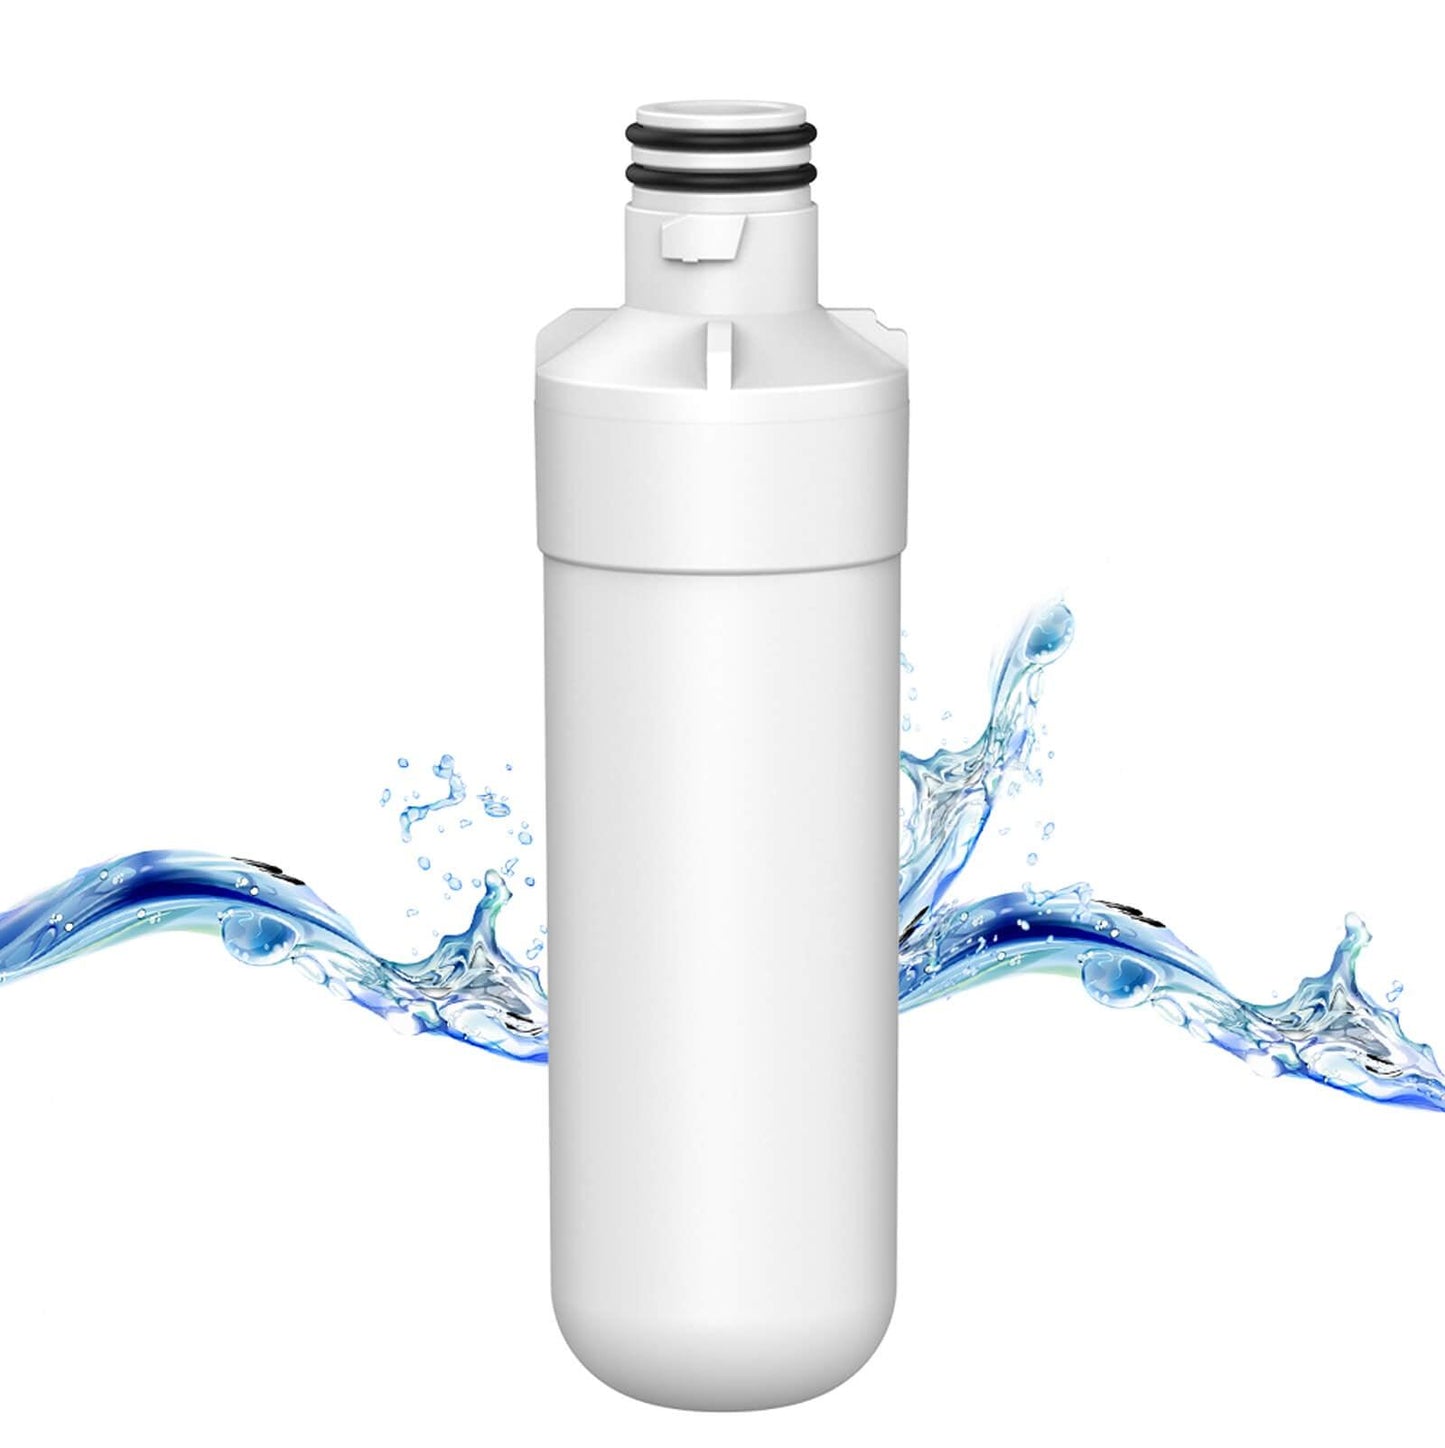 Refrigerator Water Filter For LG LT1000P LT1000PC ADQ74793501 GF-D708BSL Sparesbarn